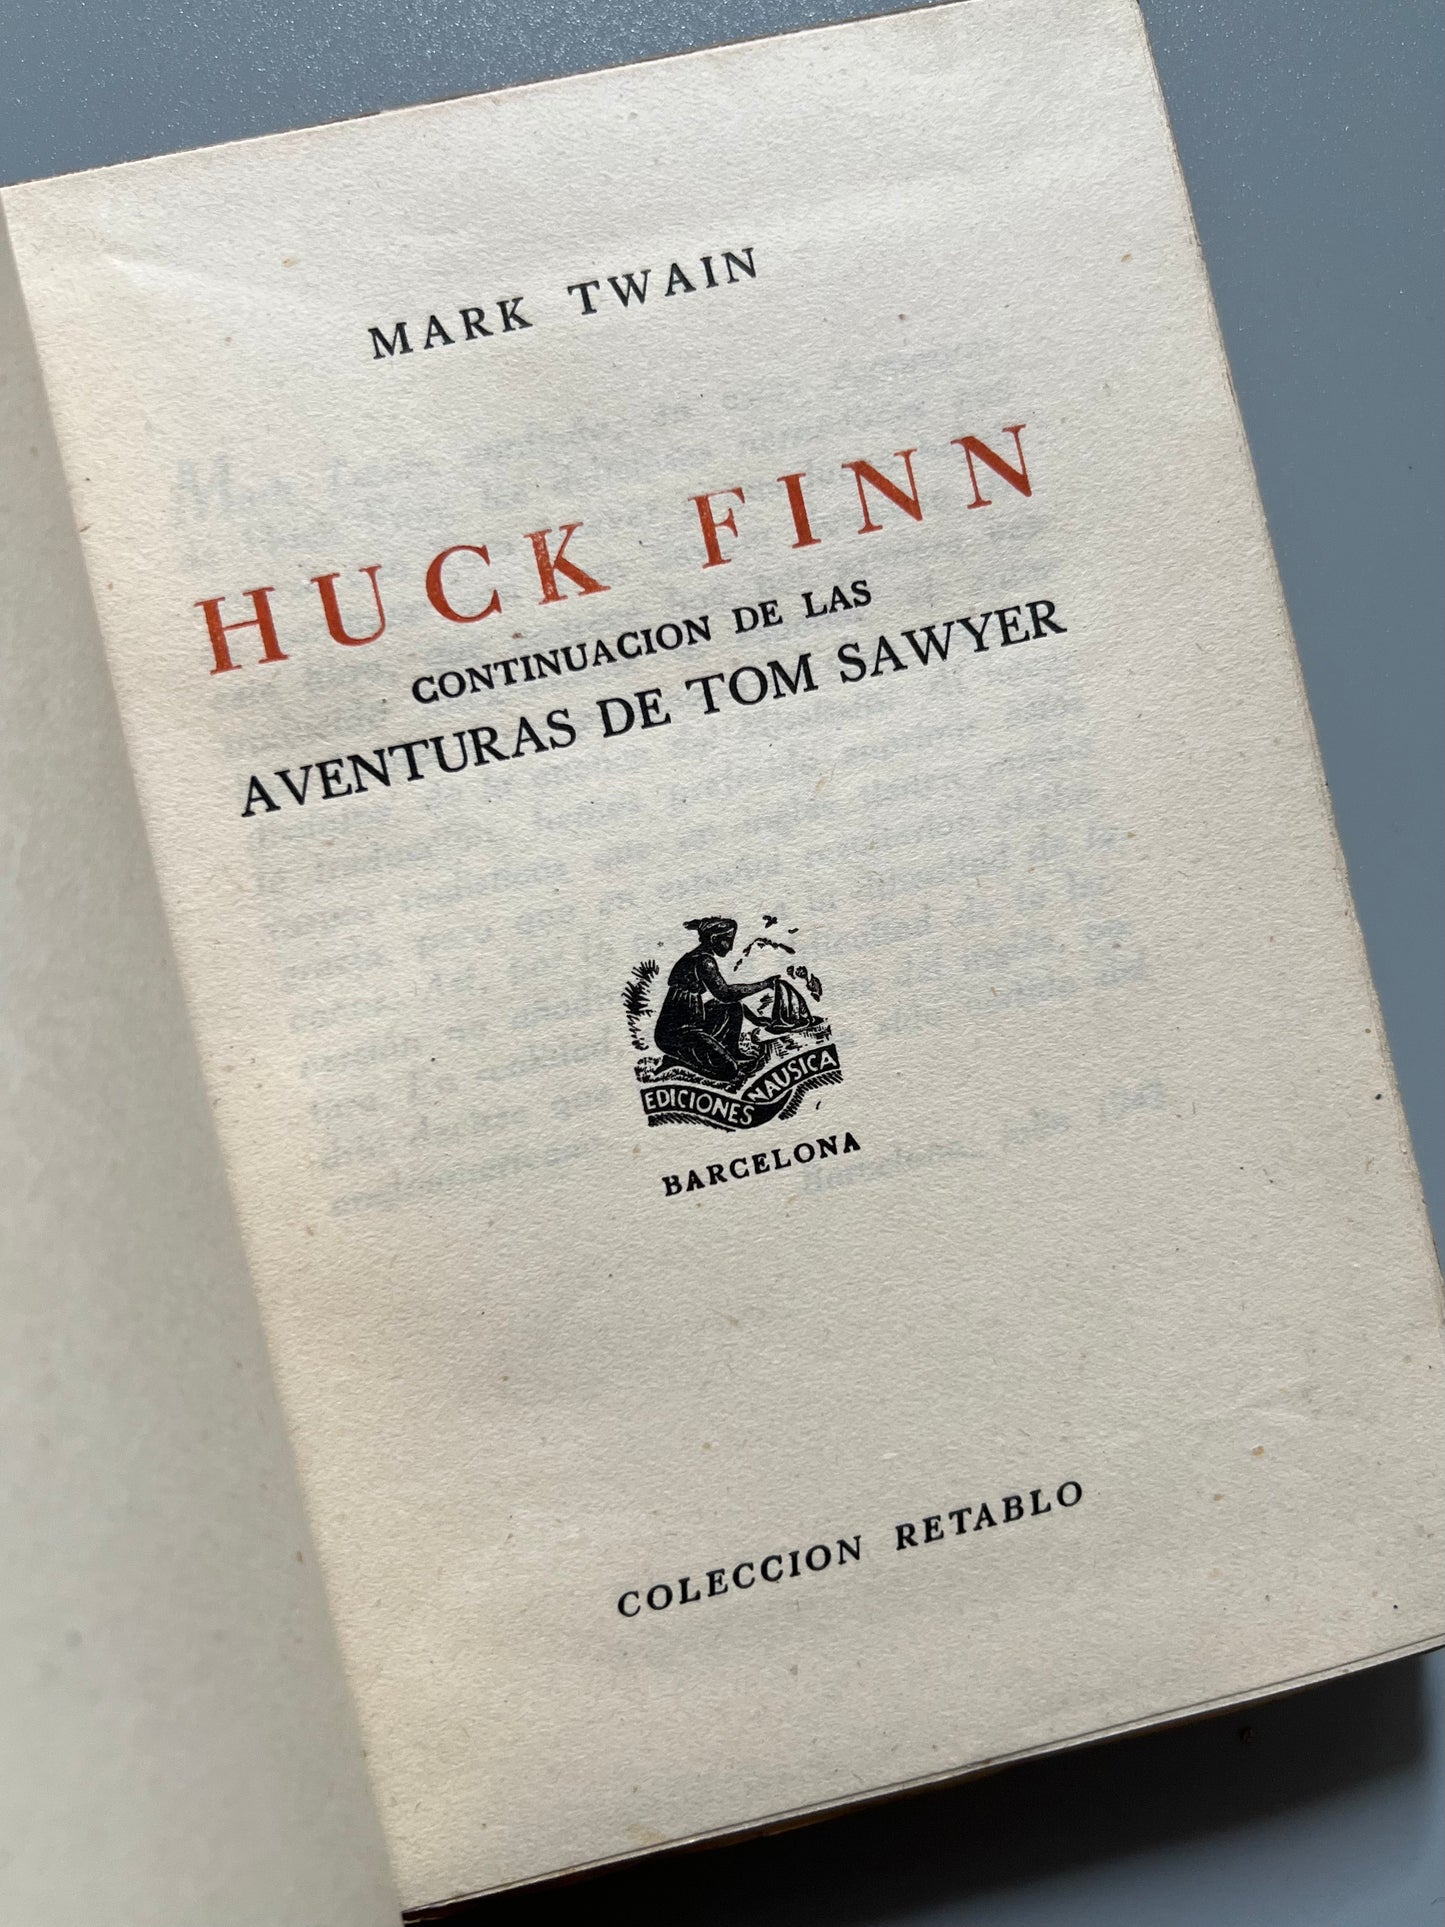 Tom Sawyer, Mark Twain. 4 obras - Ediciones Nausica, 1942-1943